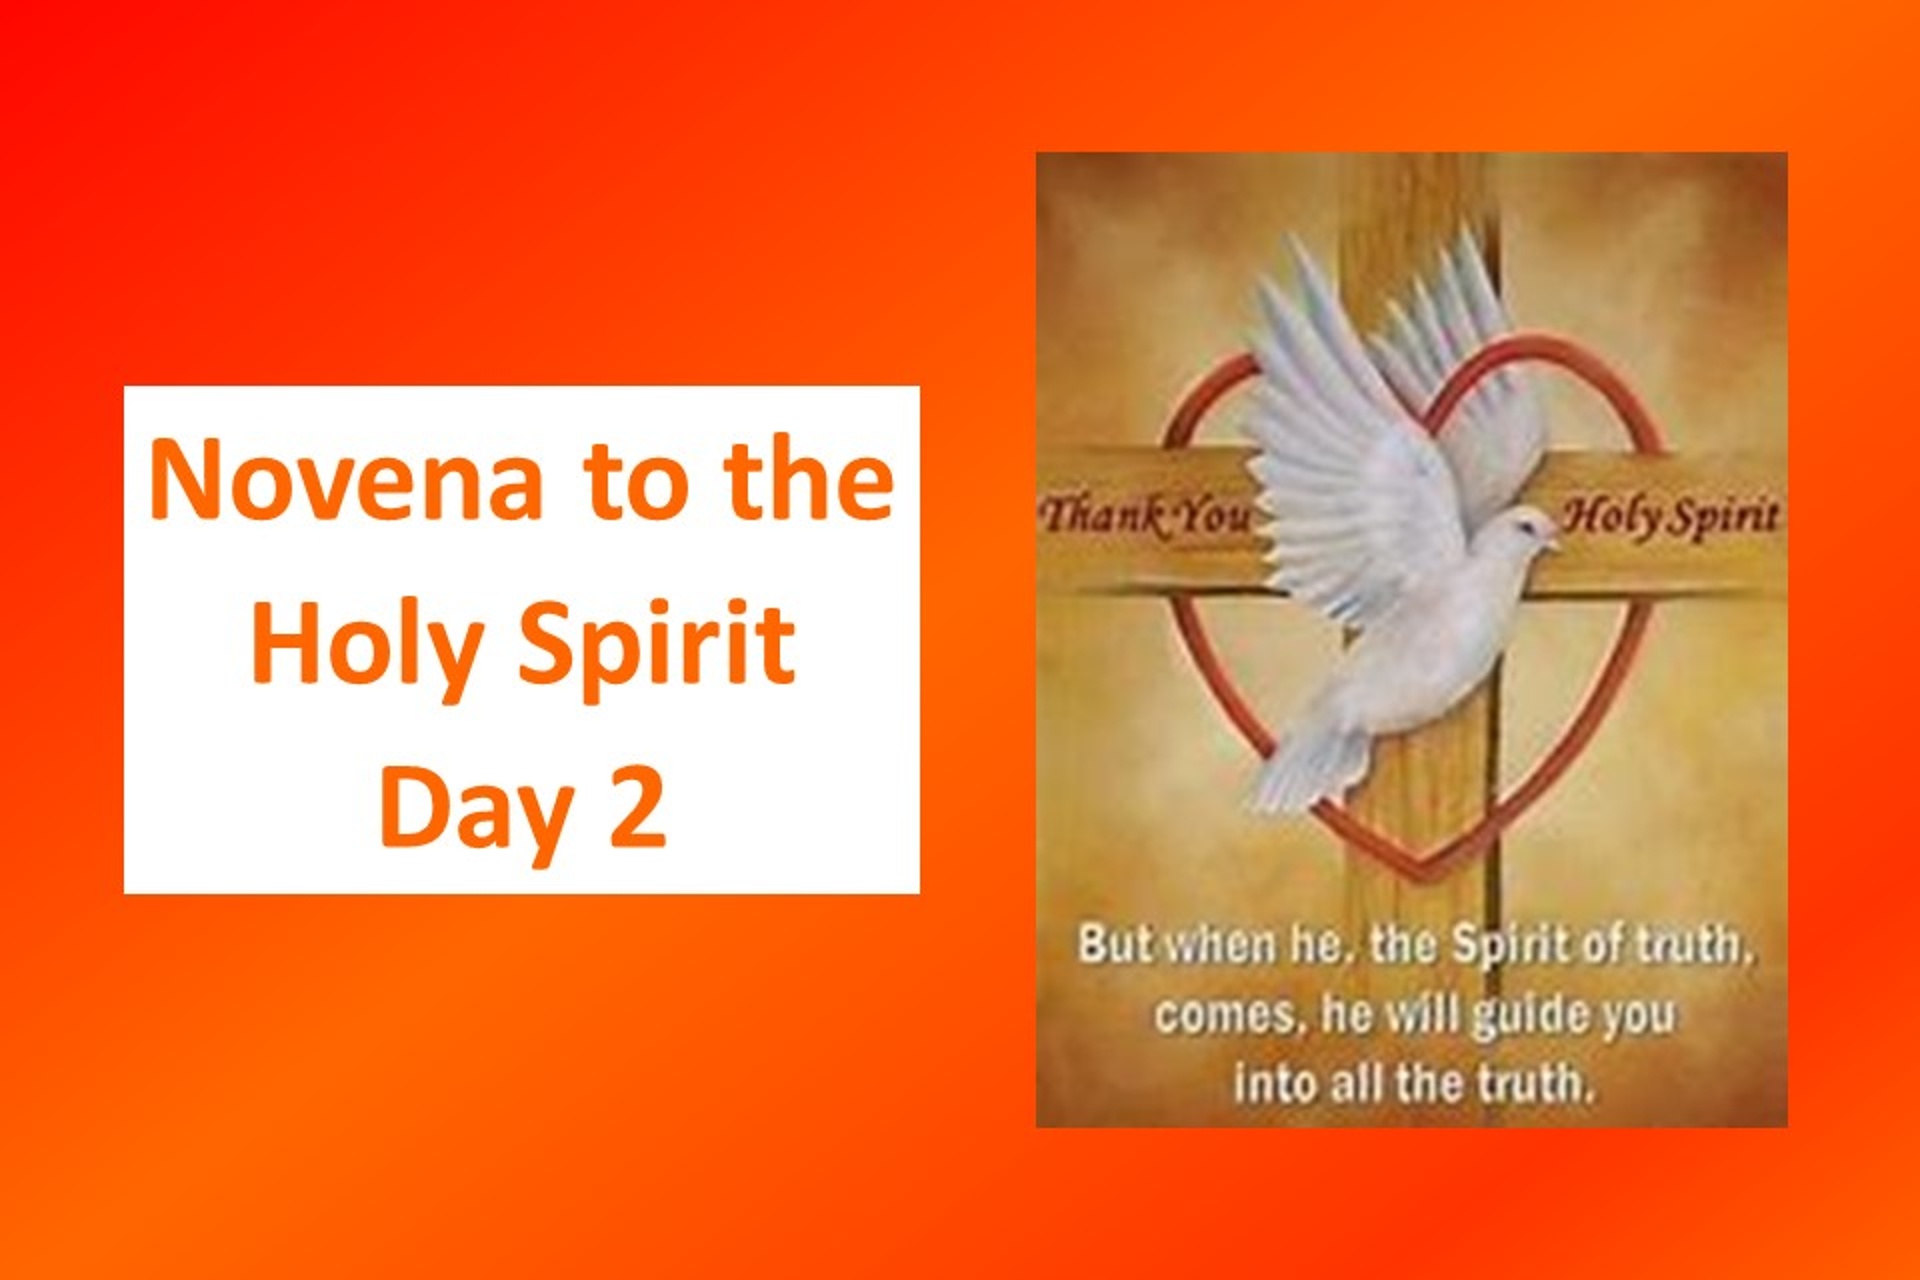 Novena to the Holy Spirit - Day 2